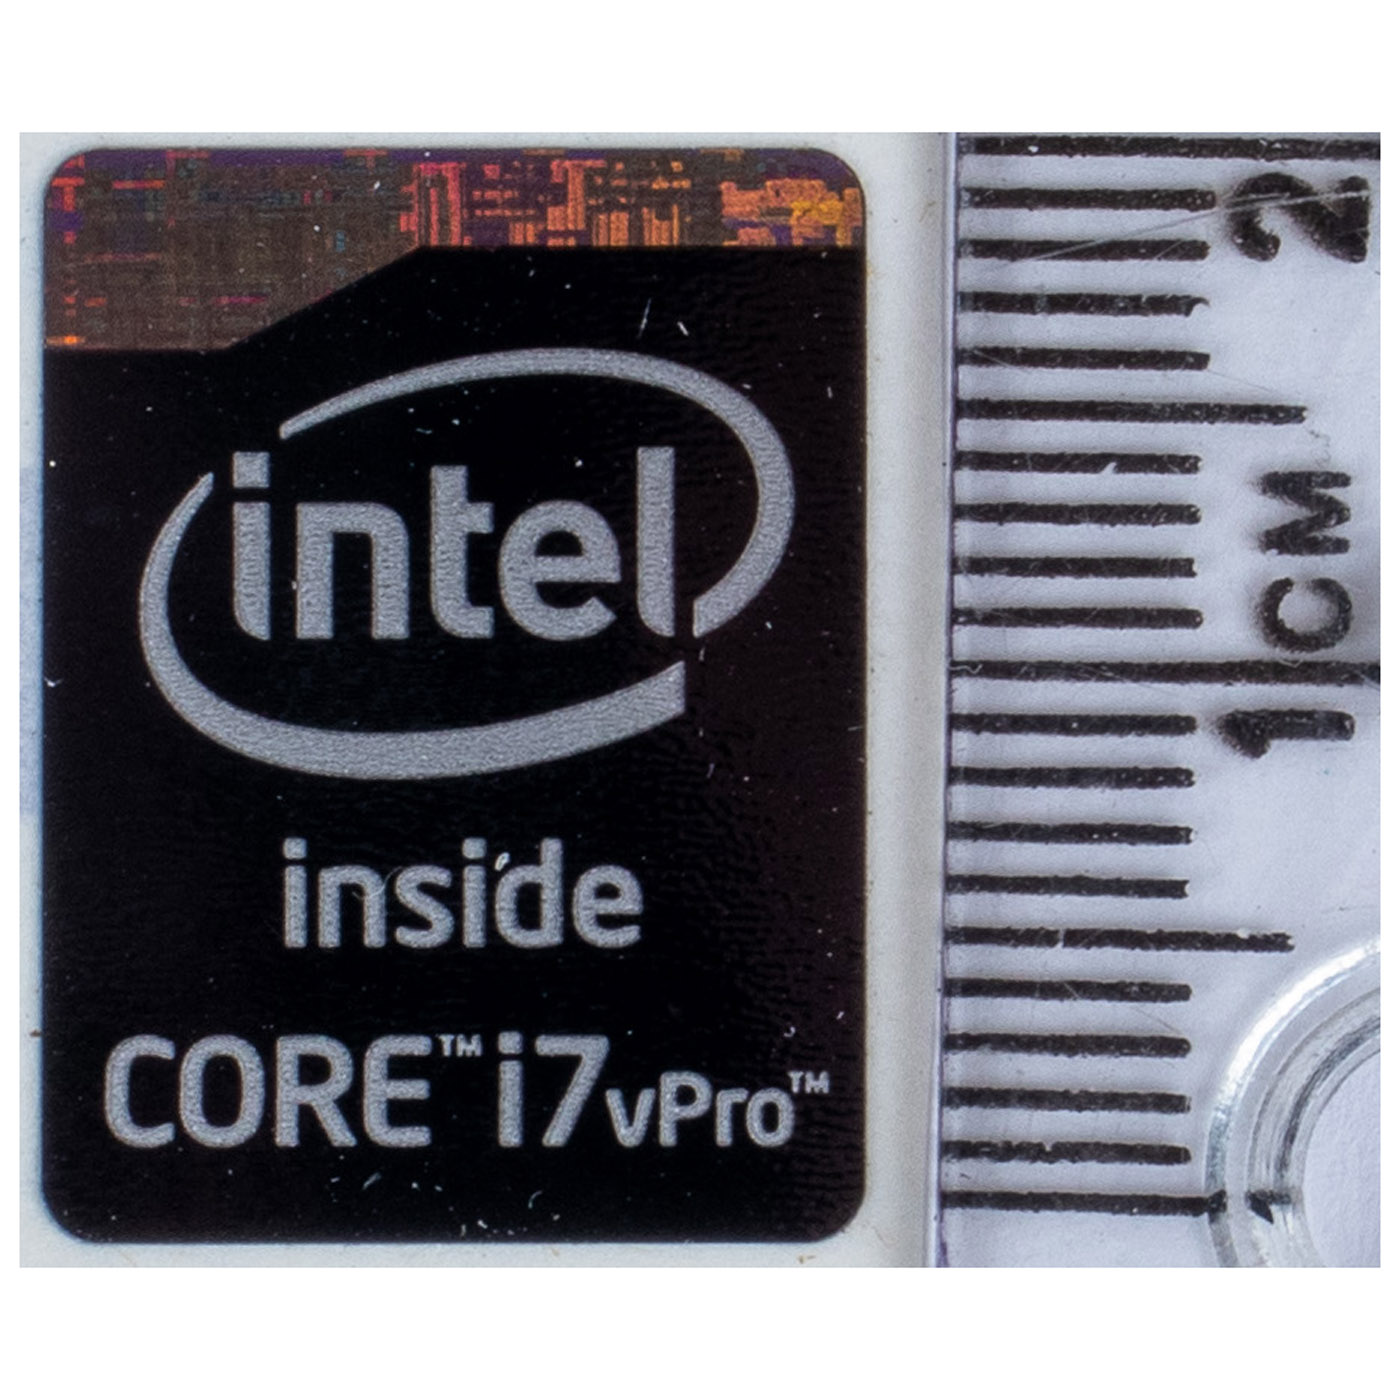 Intel Core i7 vPro sticker black 16 x 21 mm